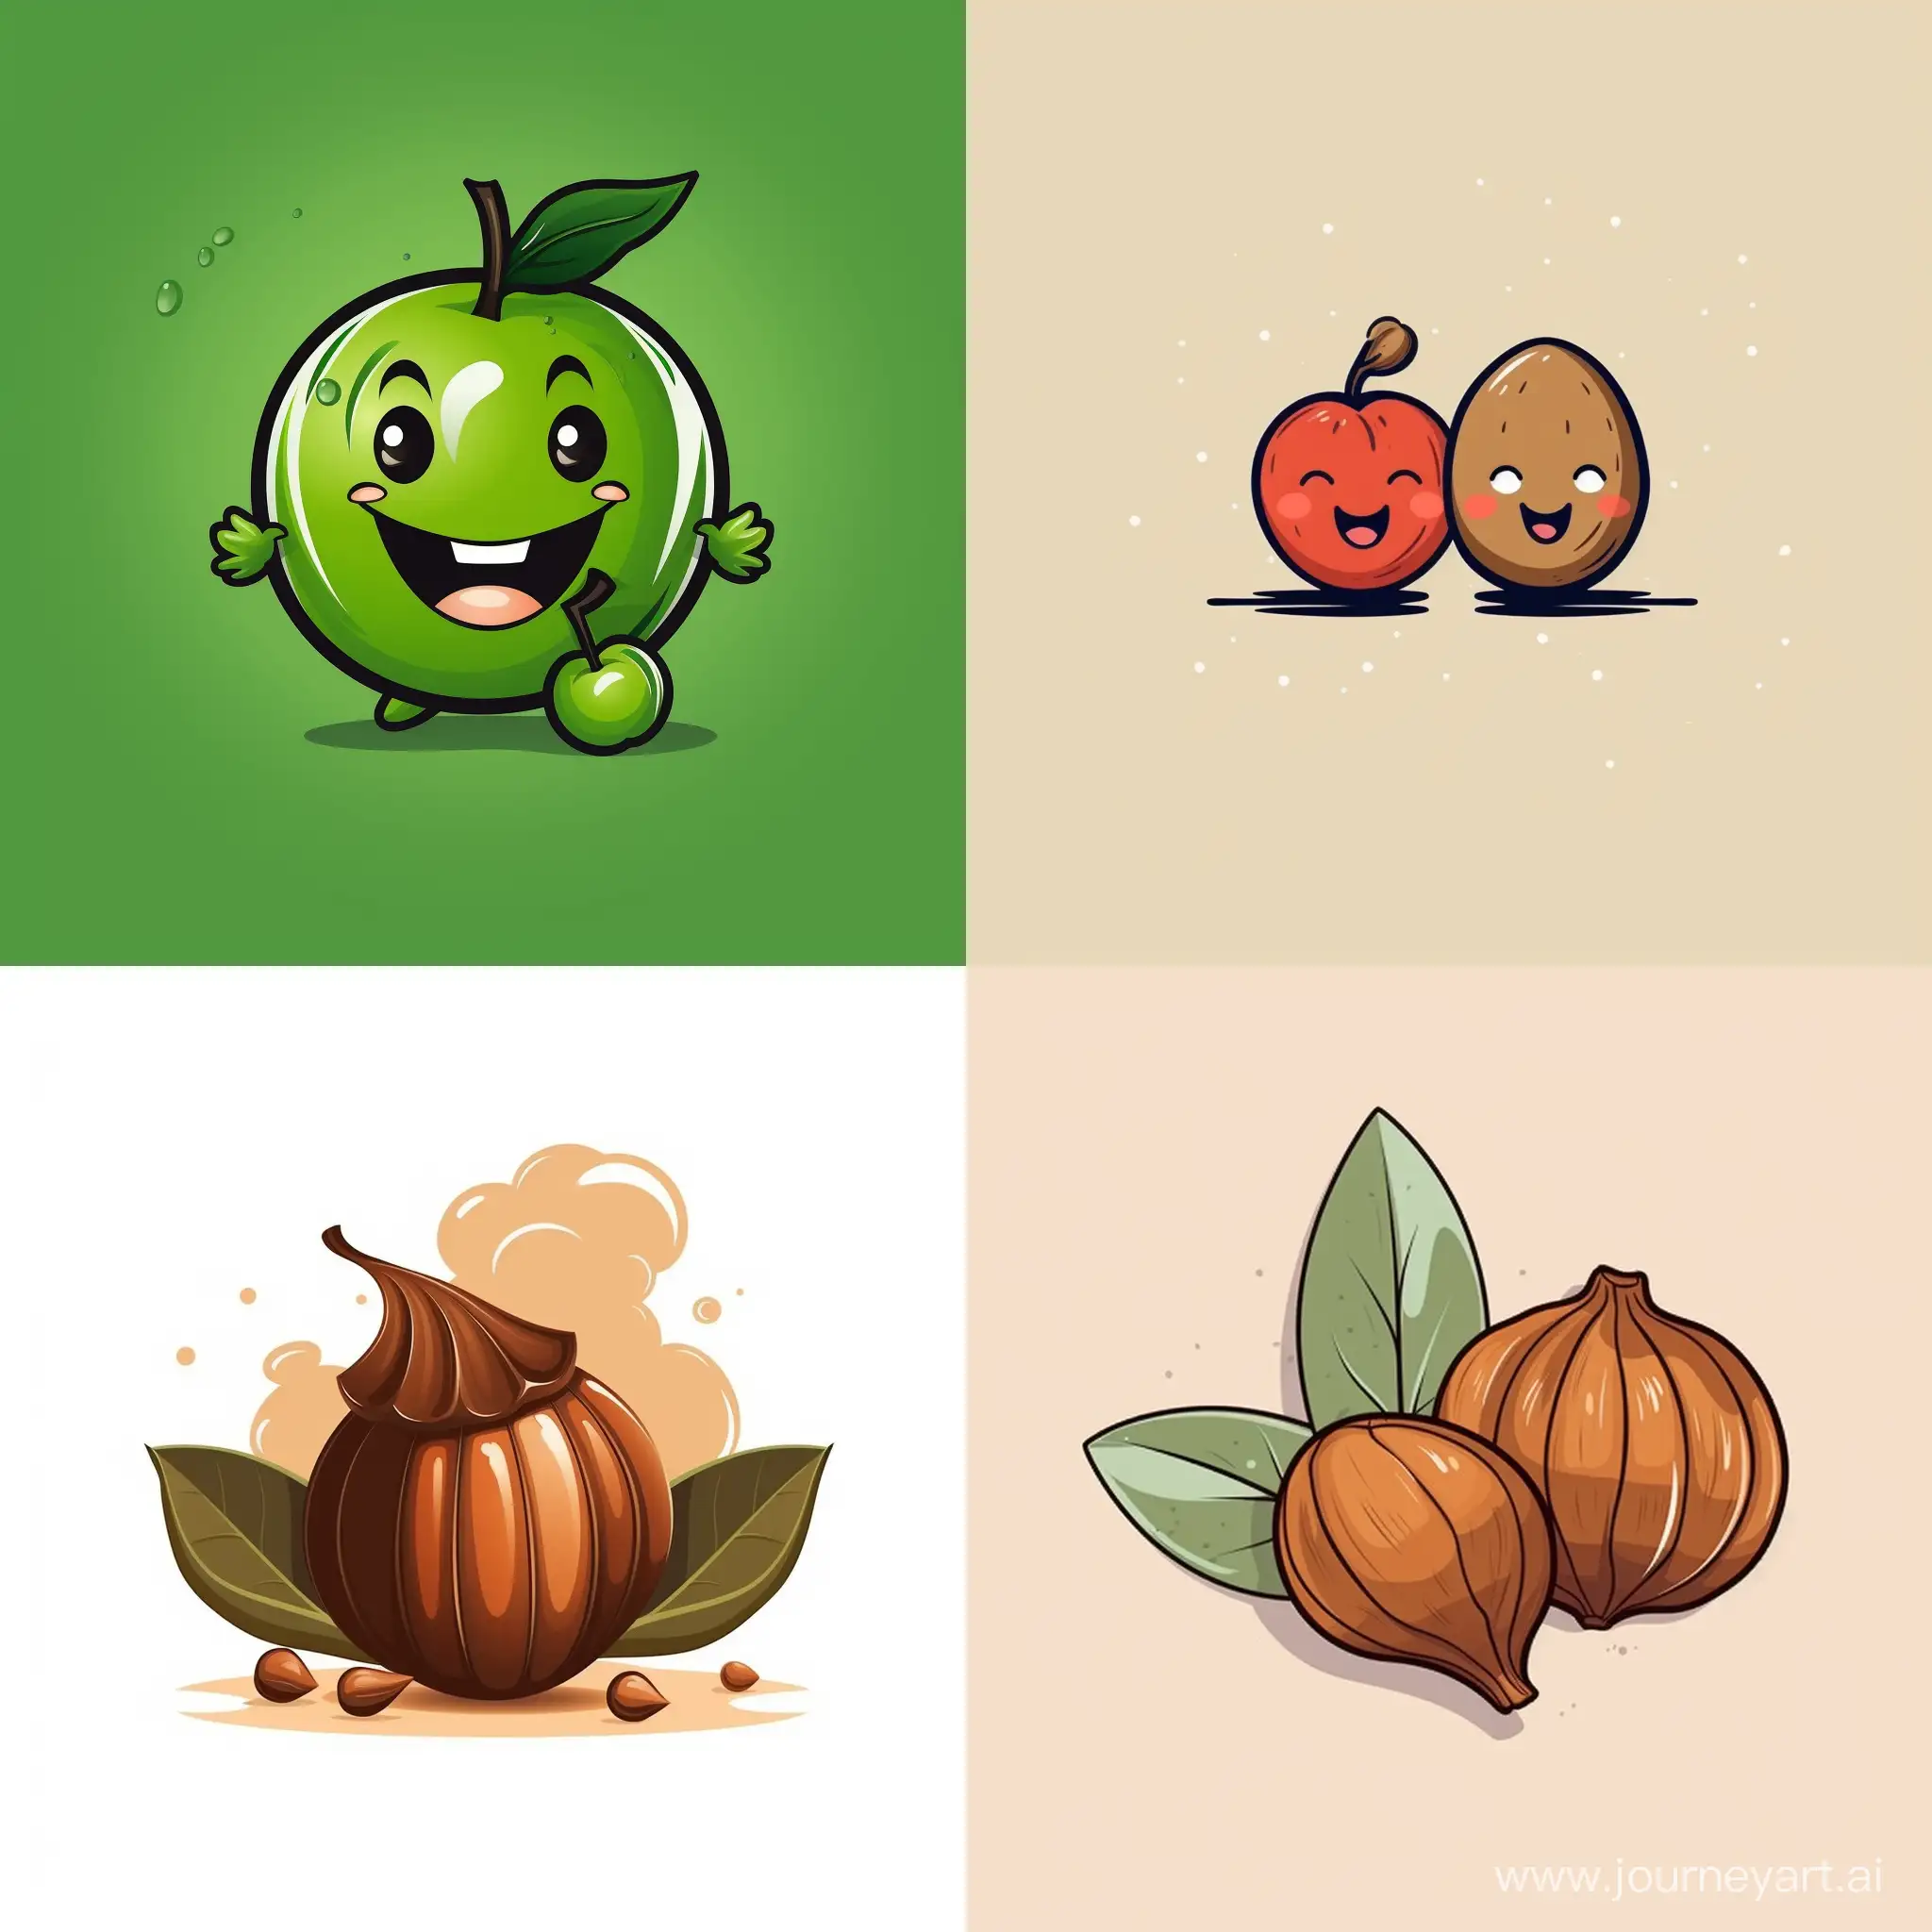 I need a logo based on hazelnuts, and the logo should be cute.